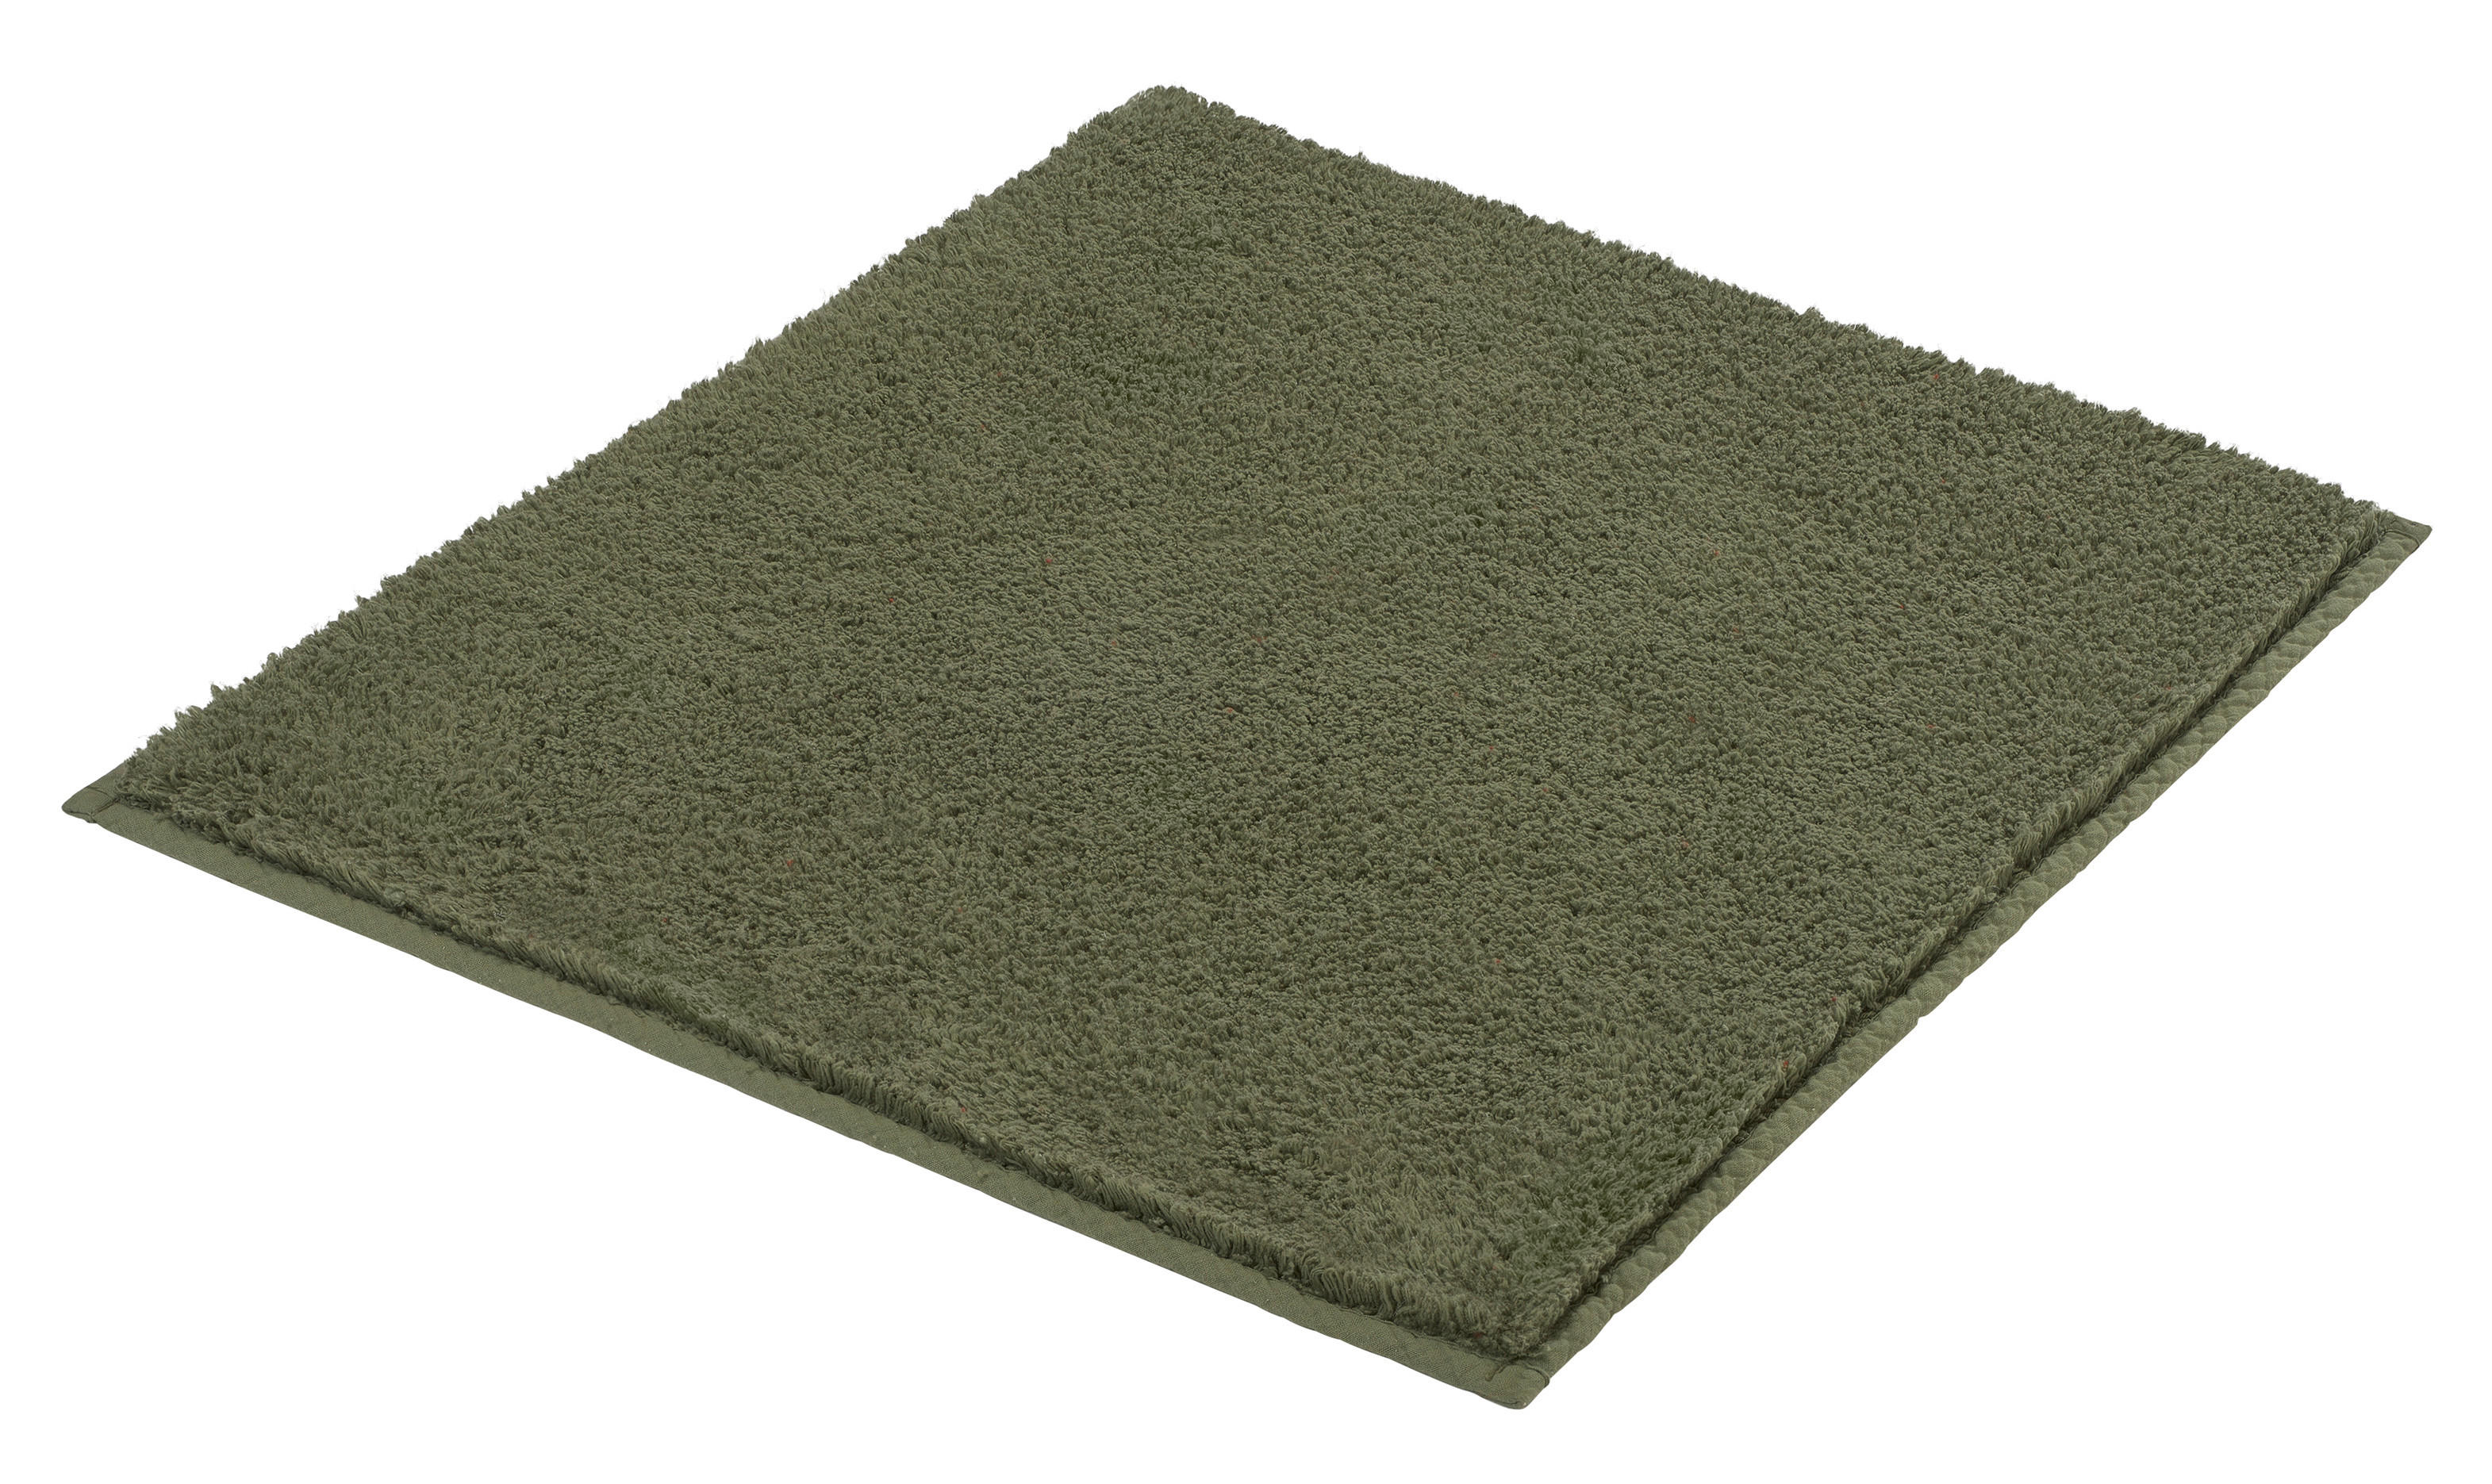 BADTEPPICH Kansas 55/65 cm  - Olivgrün, Basics, Kunststoff/Textil (55/65cm) - Kleine Wolke